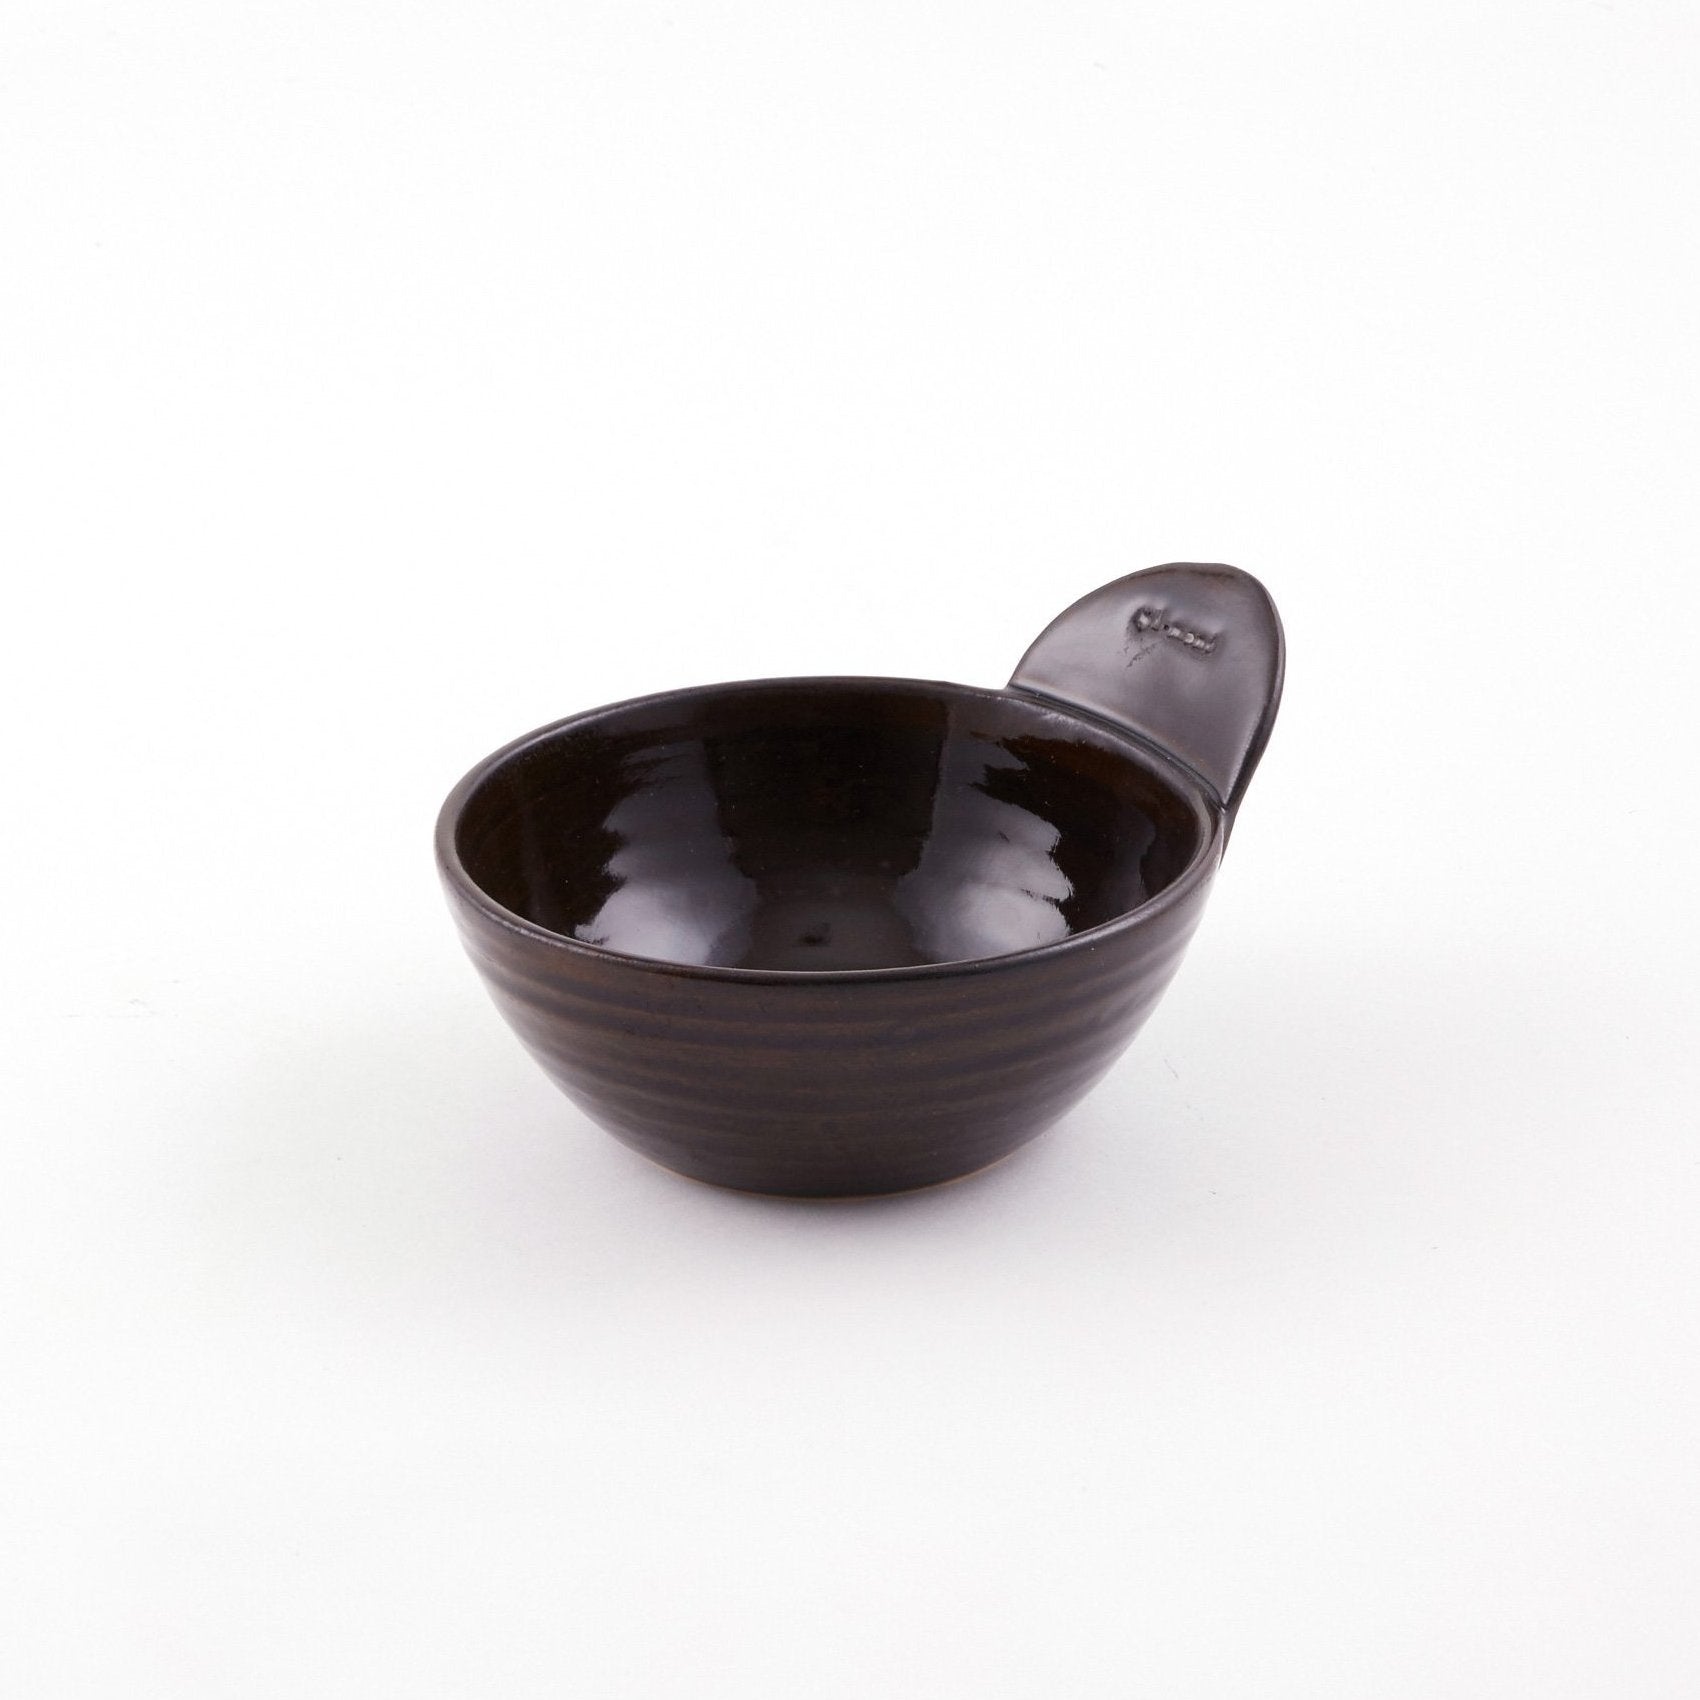 Haven & Key White Ceramic Bowl